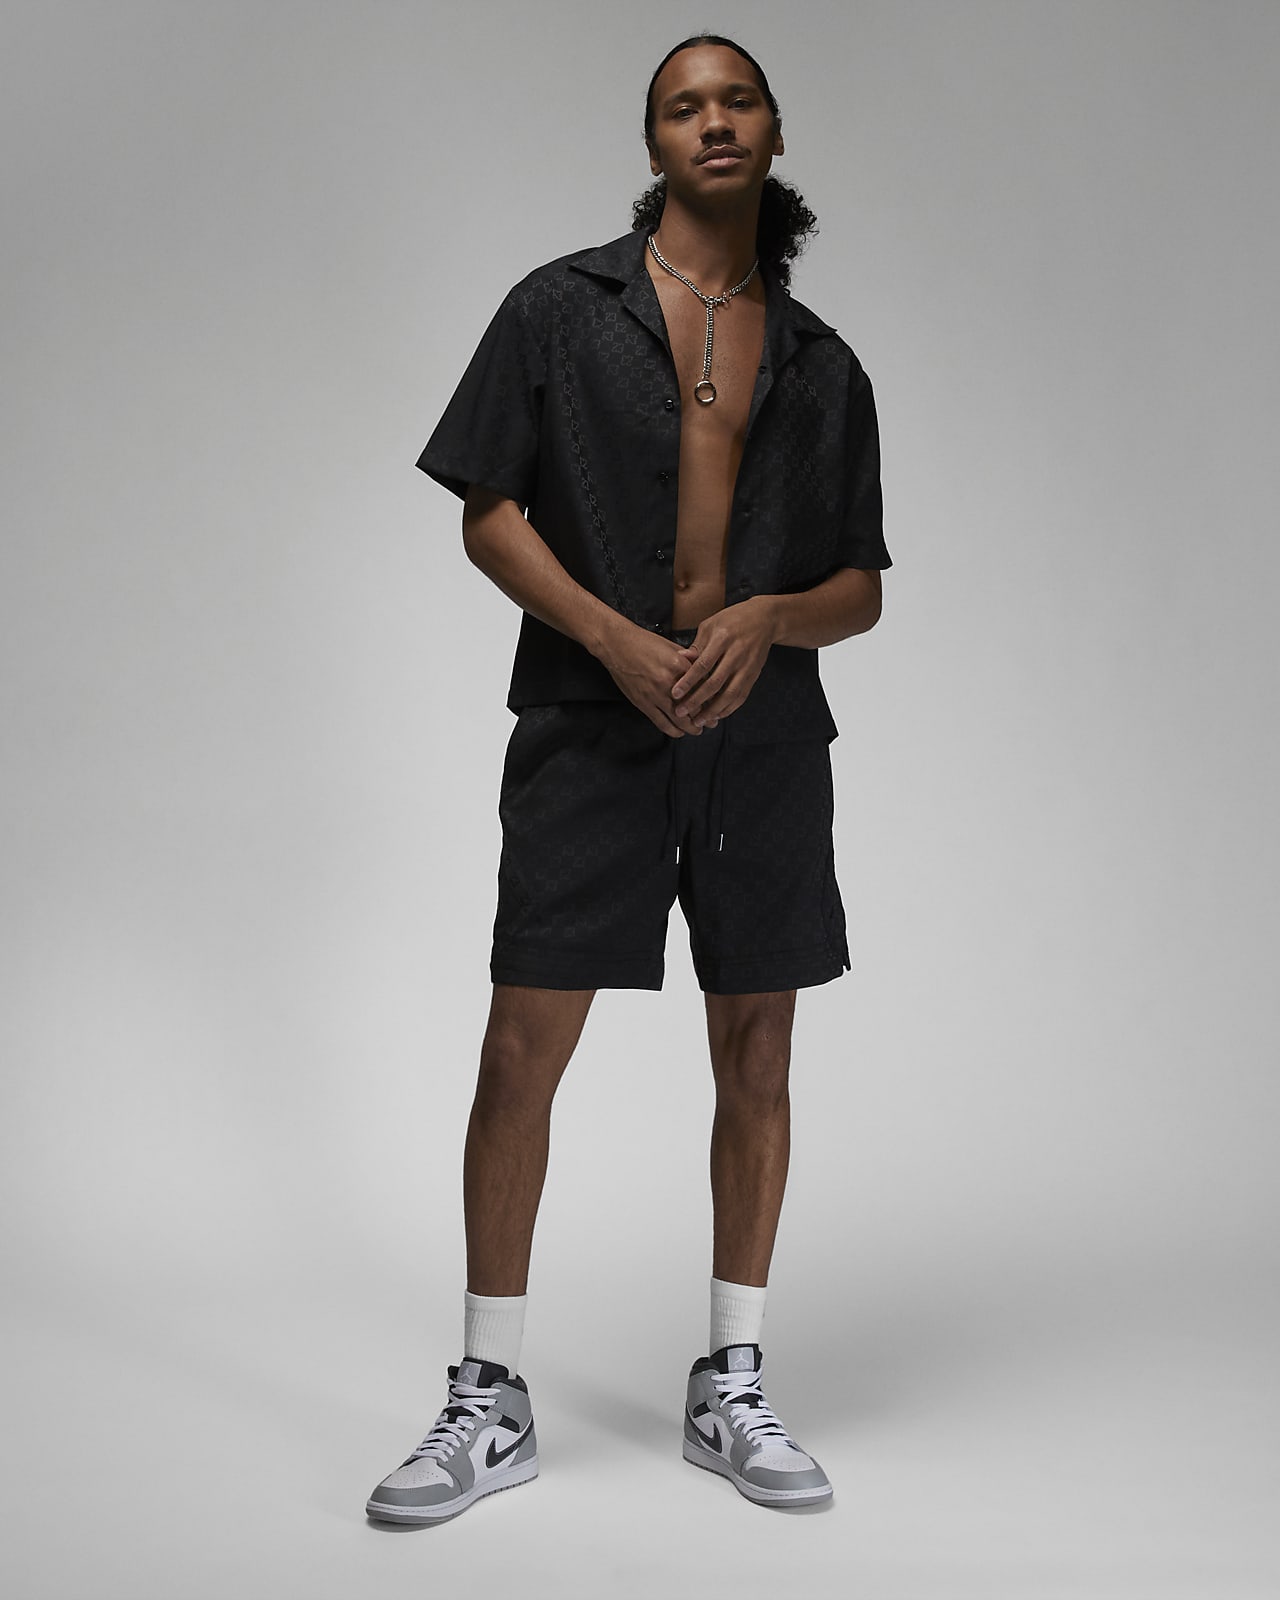 Louis Vuitton X Jordan 4s  Trendy mens fashion, Guys fits, Jordan 4s